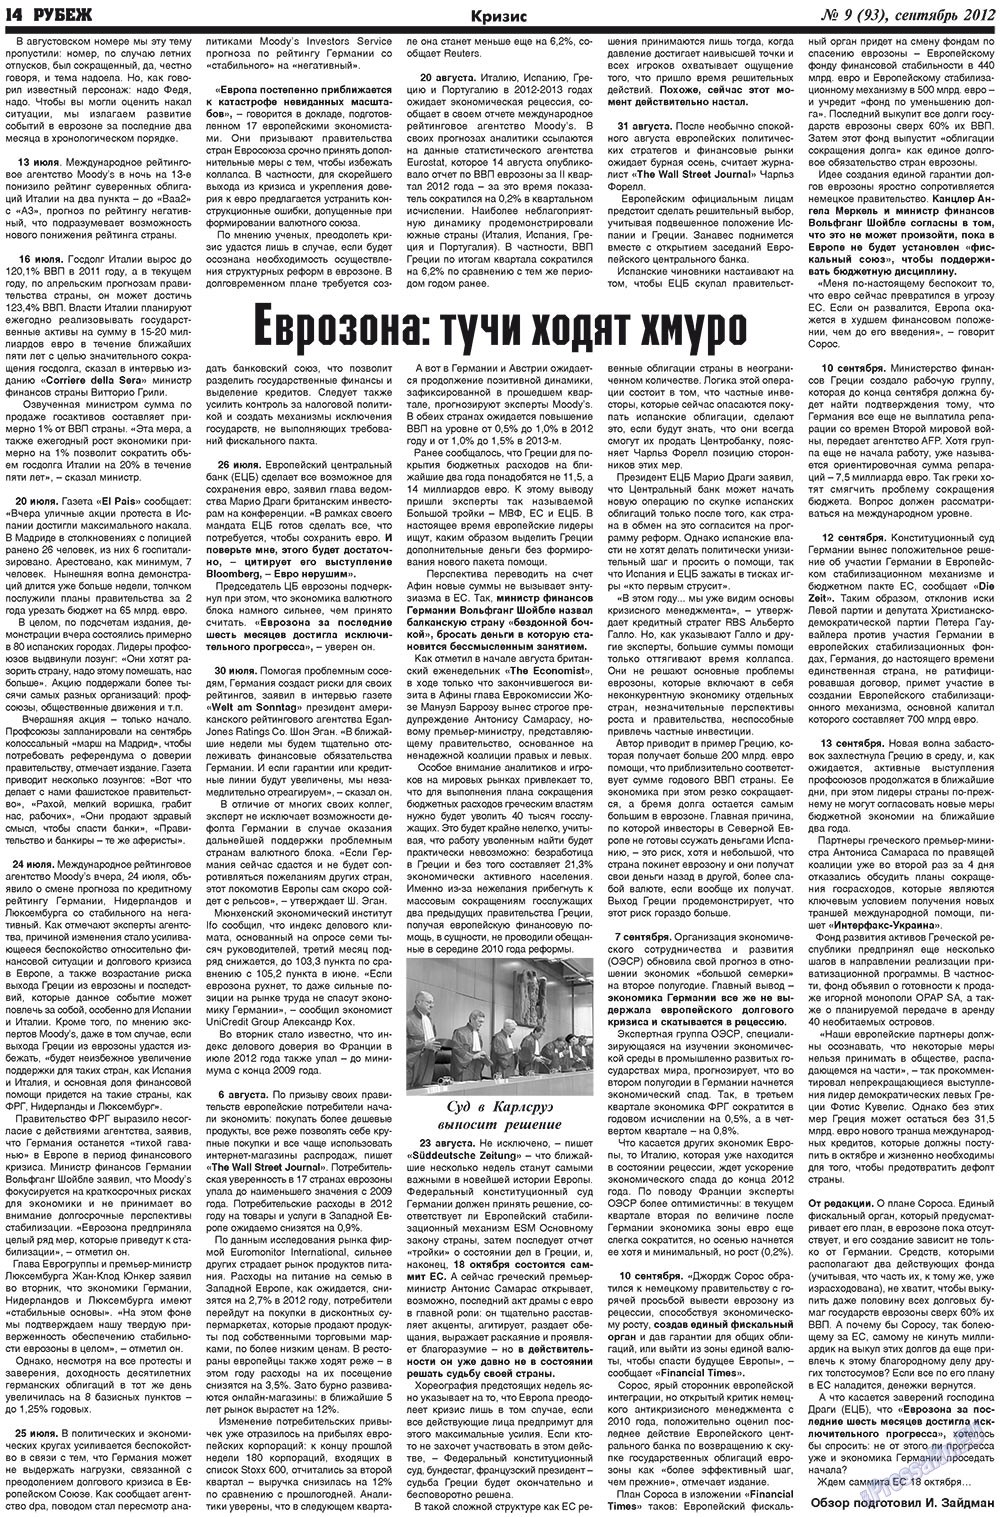 Рубеж, газета. 2012 №9 стр.14